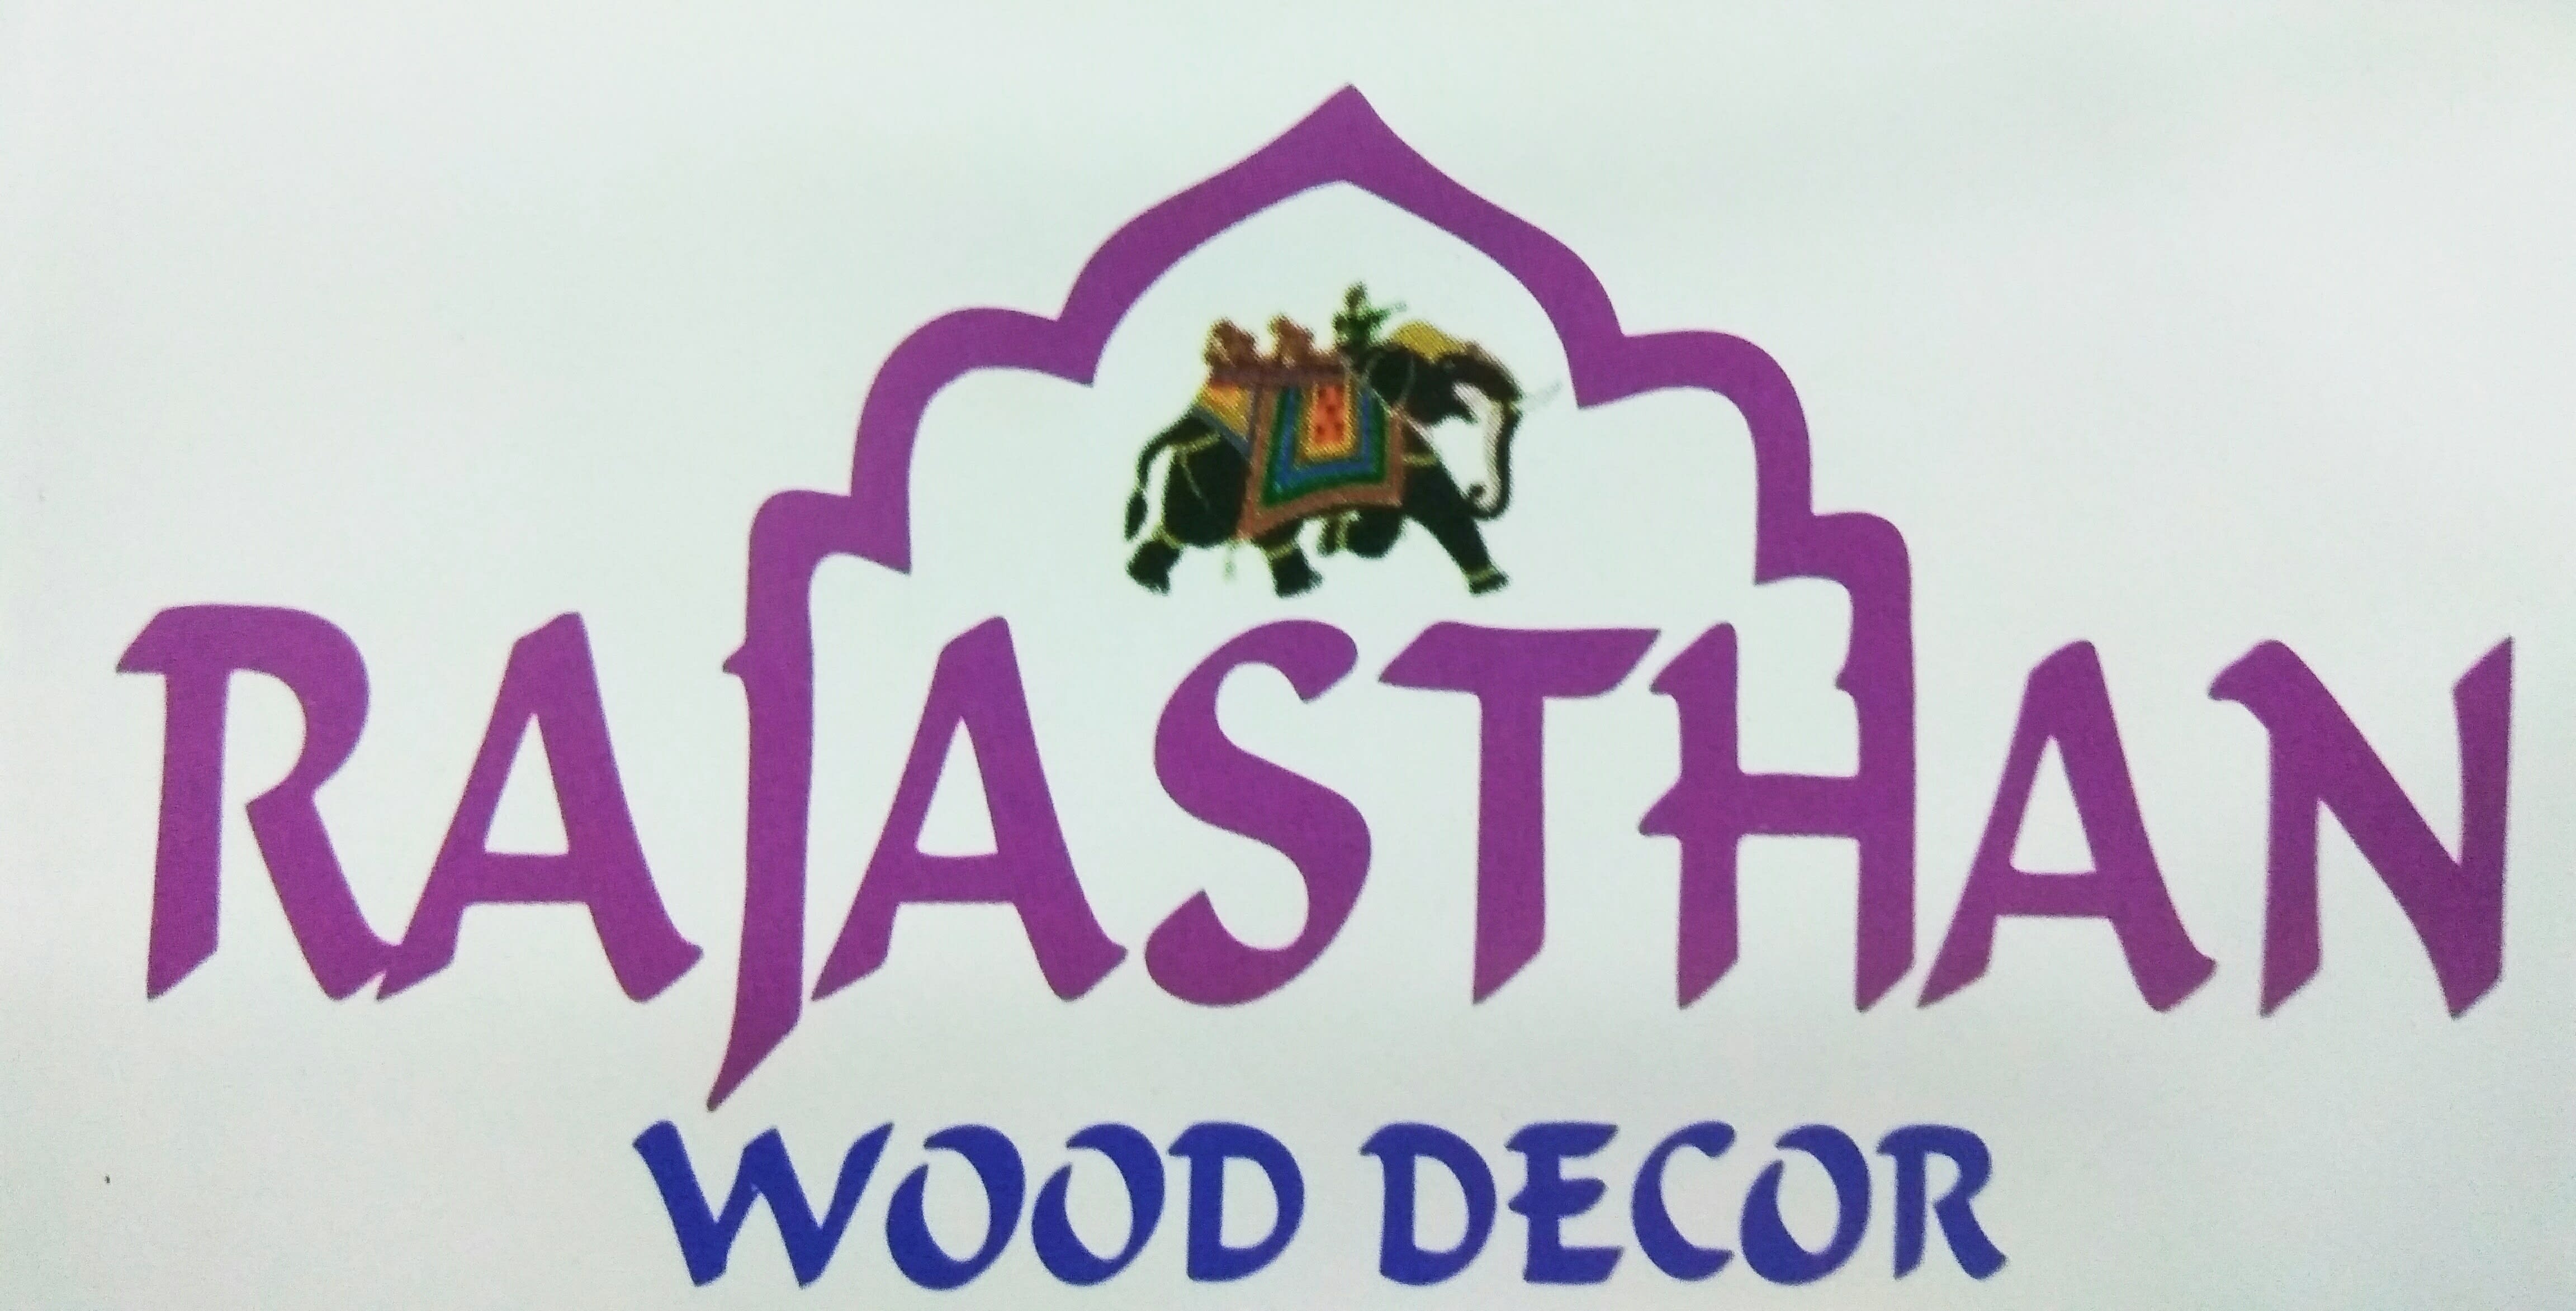 Rajasthan Wood Decor